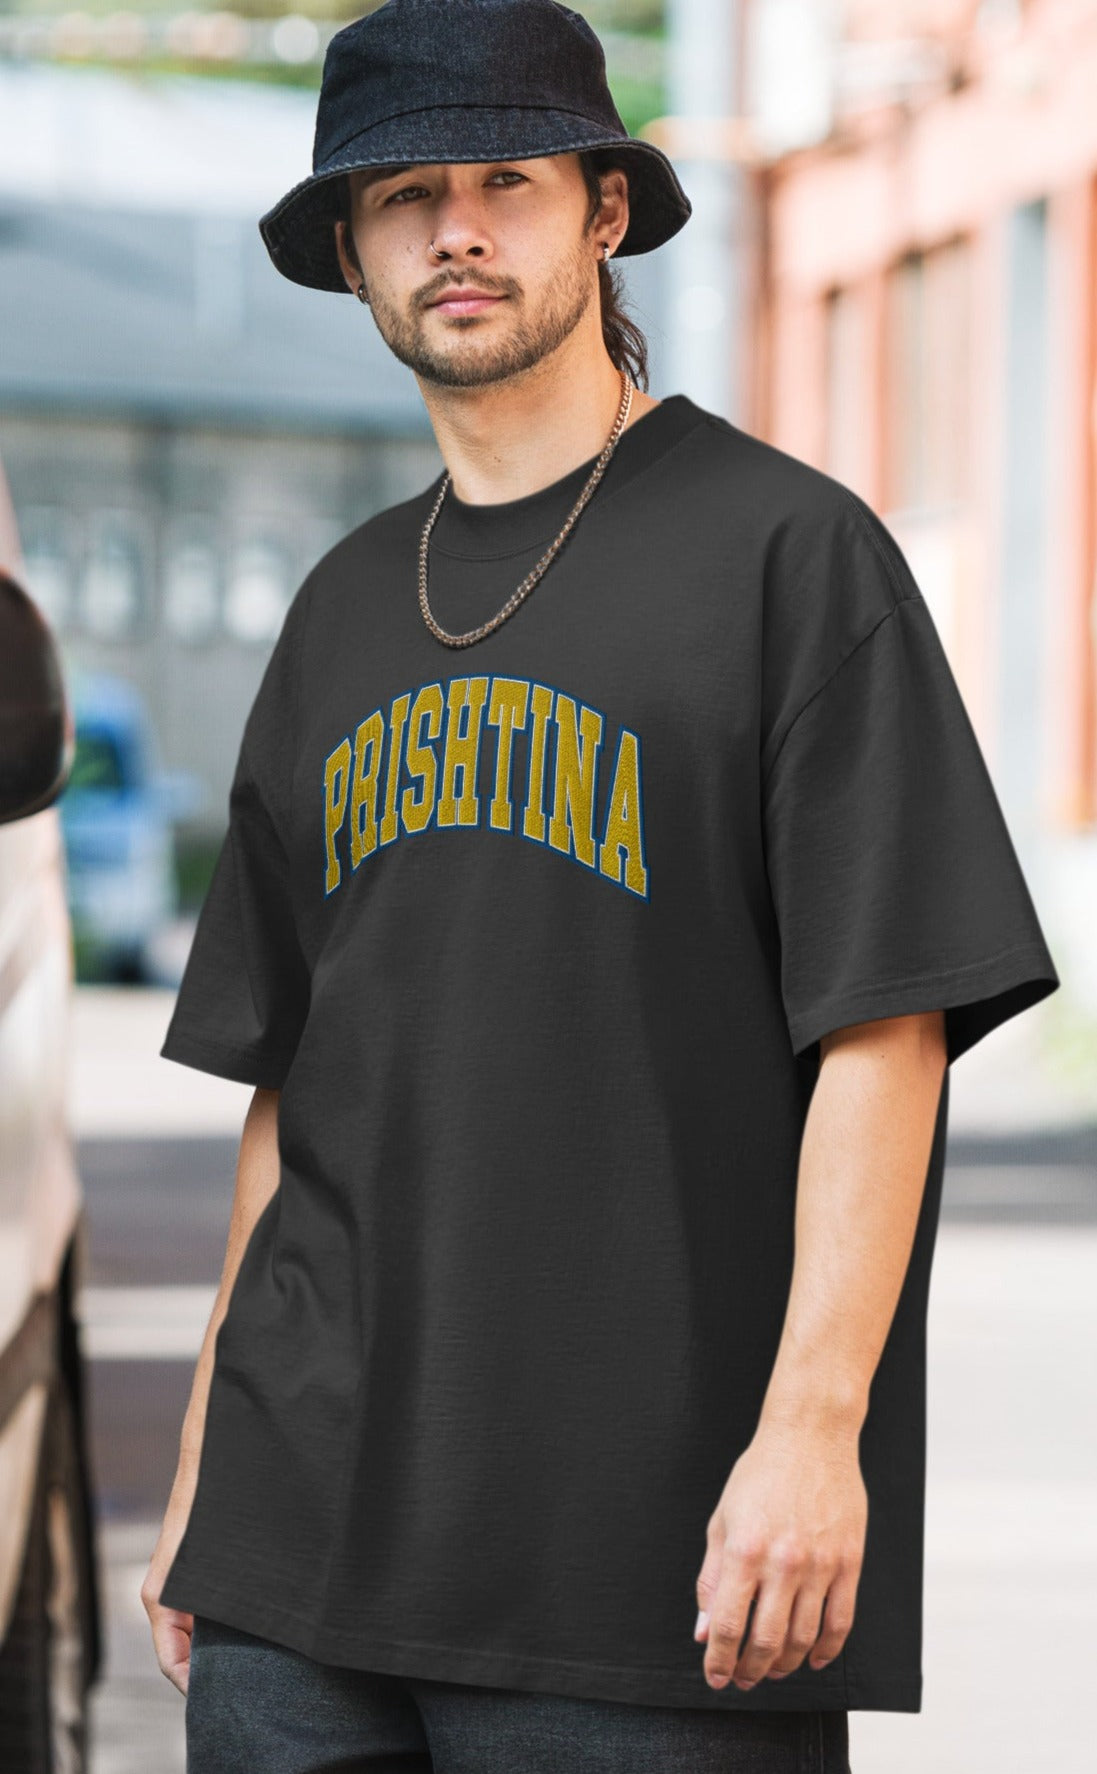 Oversized Prishtina Kosovo faded t-shirt